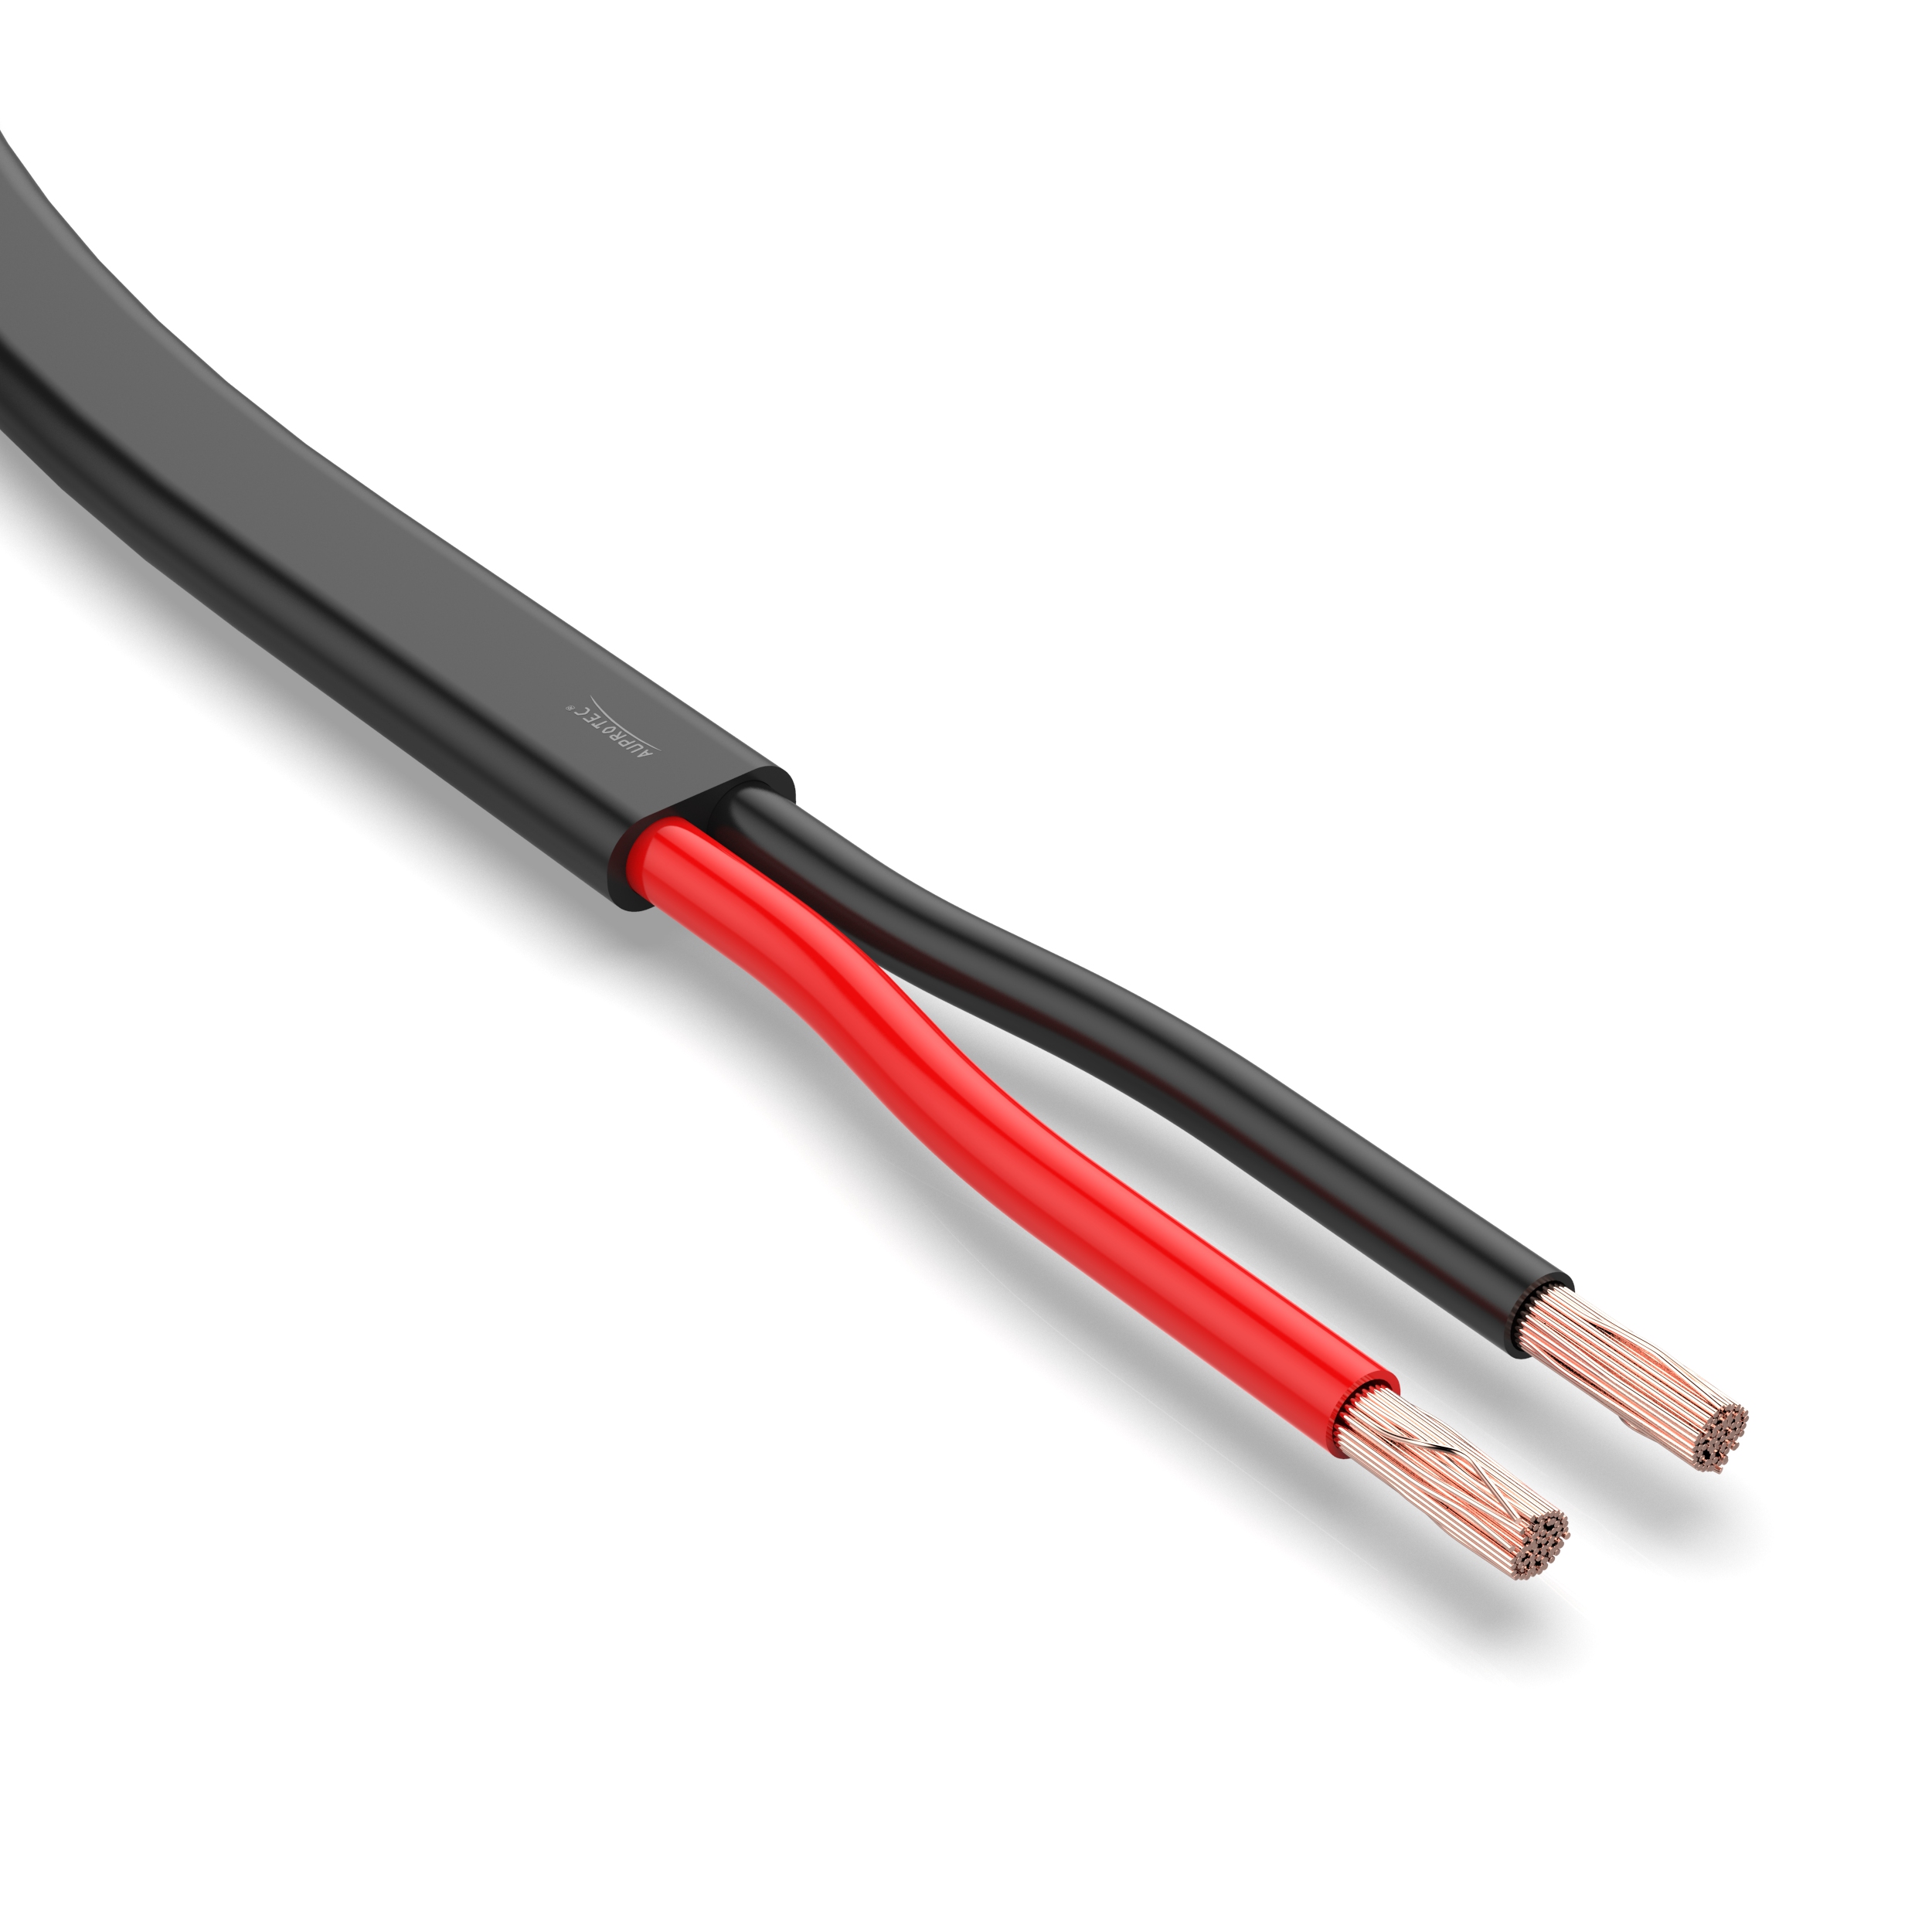 Elektrokabel 4 drahte 2.5mm2 ø10mm 1m elektrisches kabel flexibles